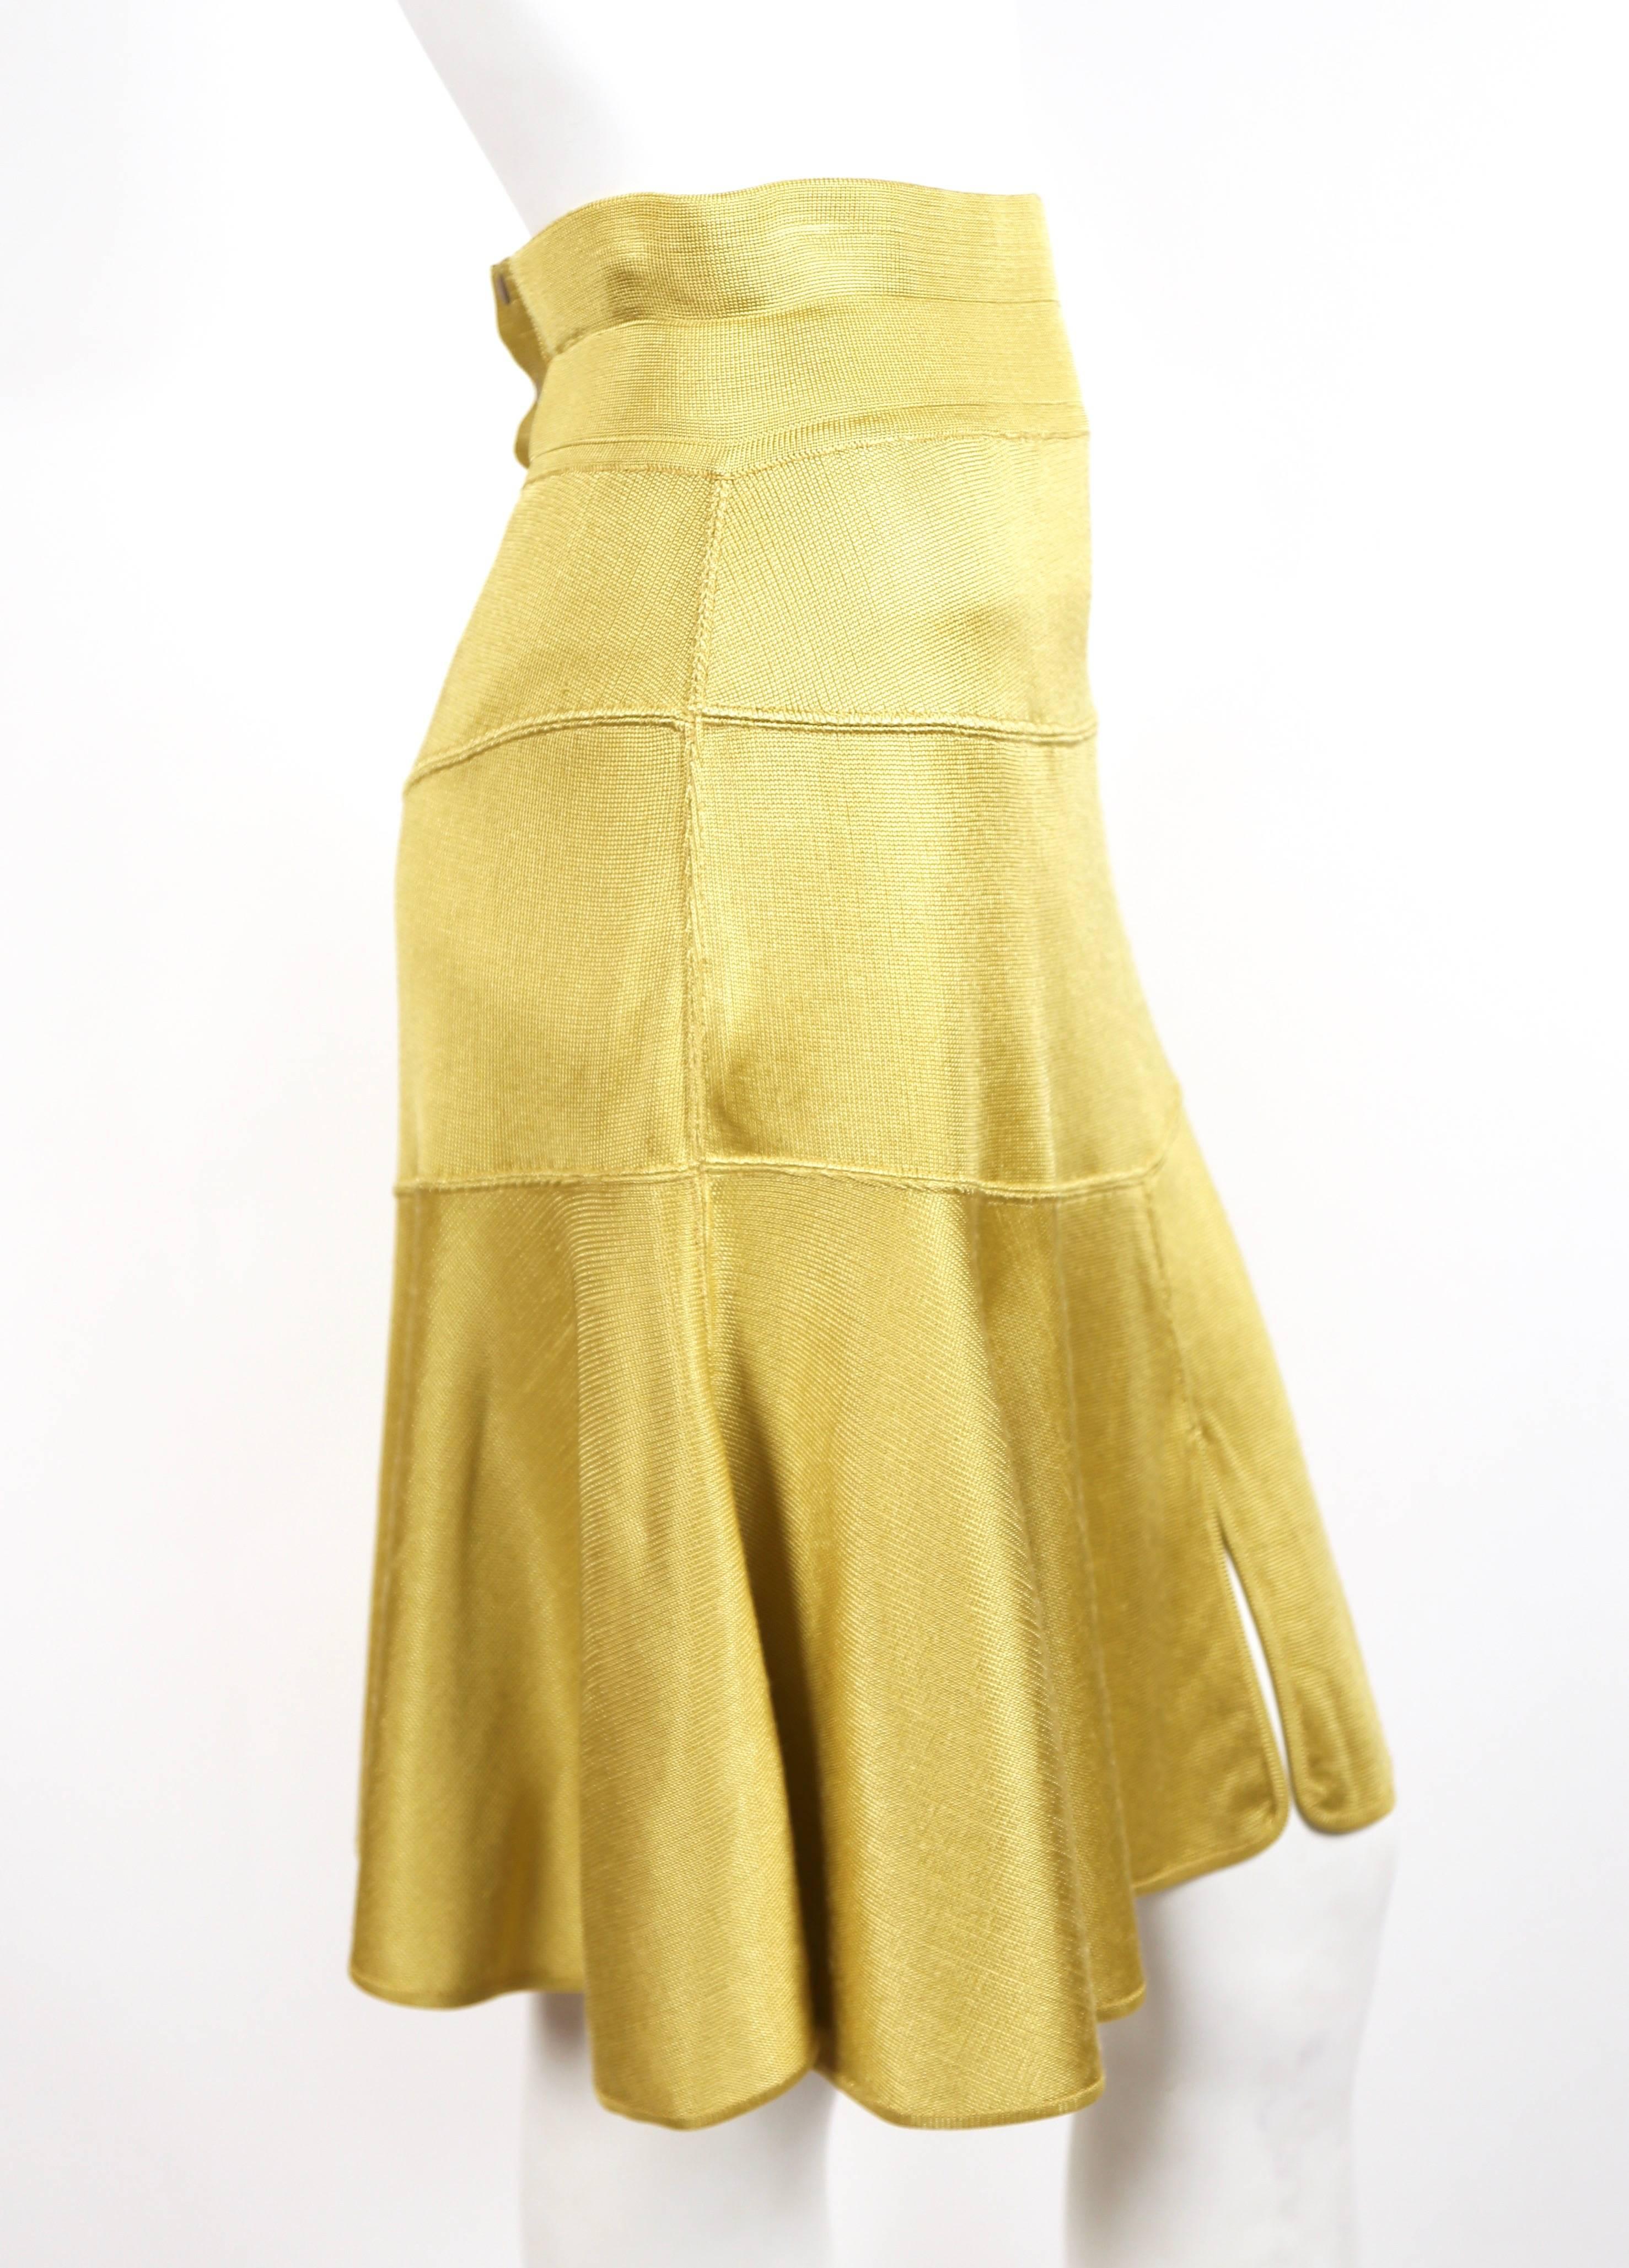 Beige 1980's AZZEDINE ALAIA yellow seamed skirt with high waist